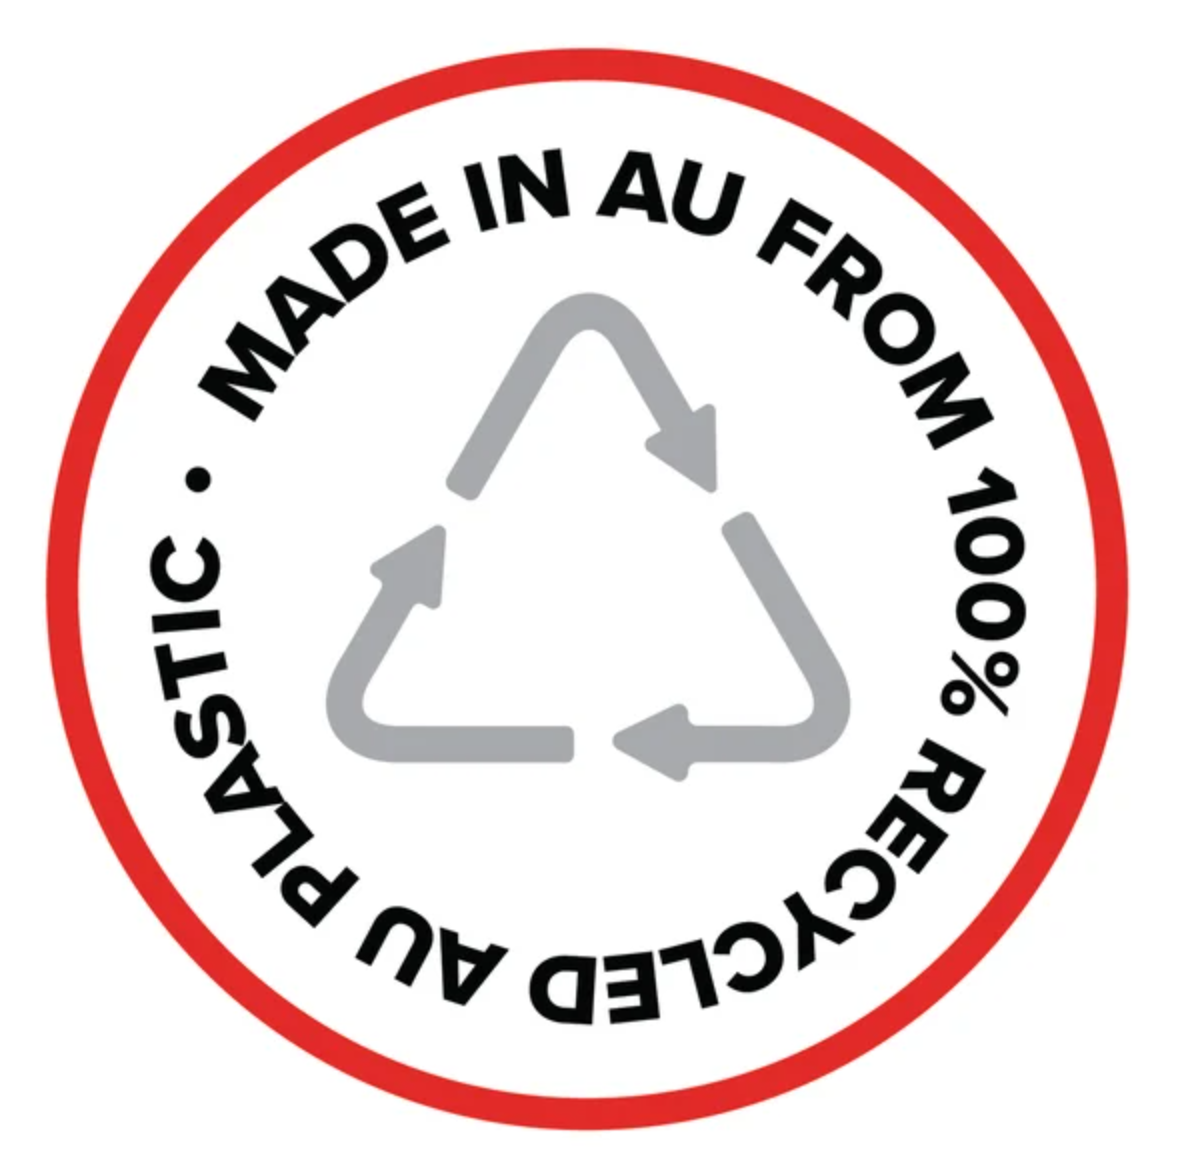 Made in AU logo